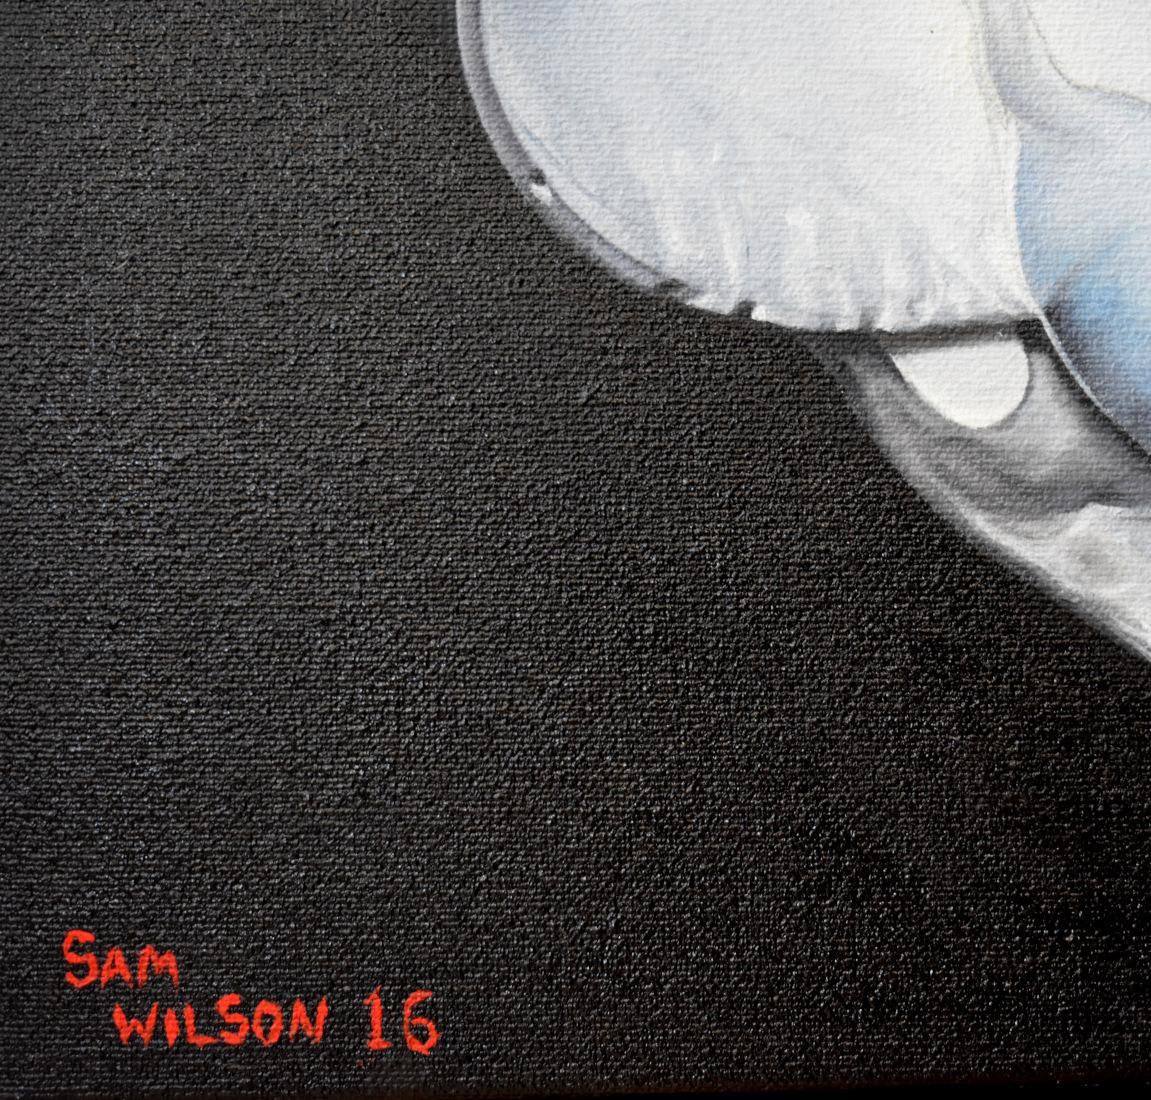 Samuel Wilson
(1986-Present)
Texas Artist
Image Size: 24 x 24
Medium: Oil
